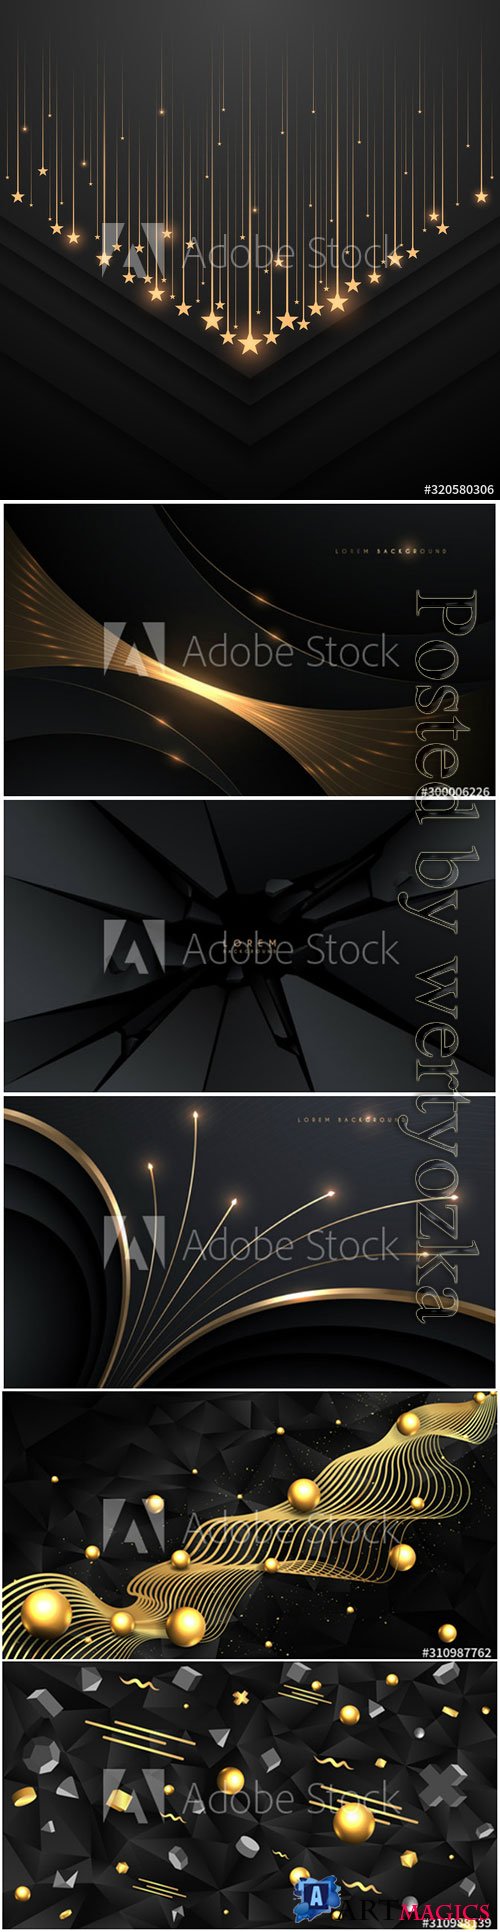 Golden black 3D primitives realistic geometric vector illustration